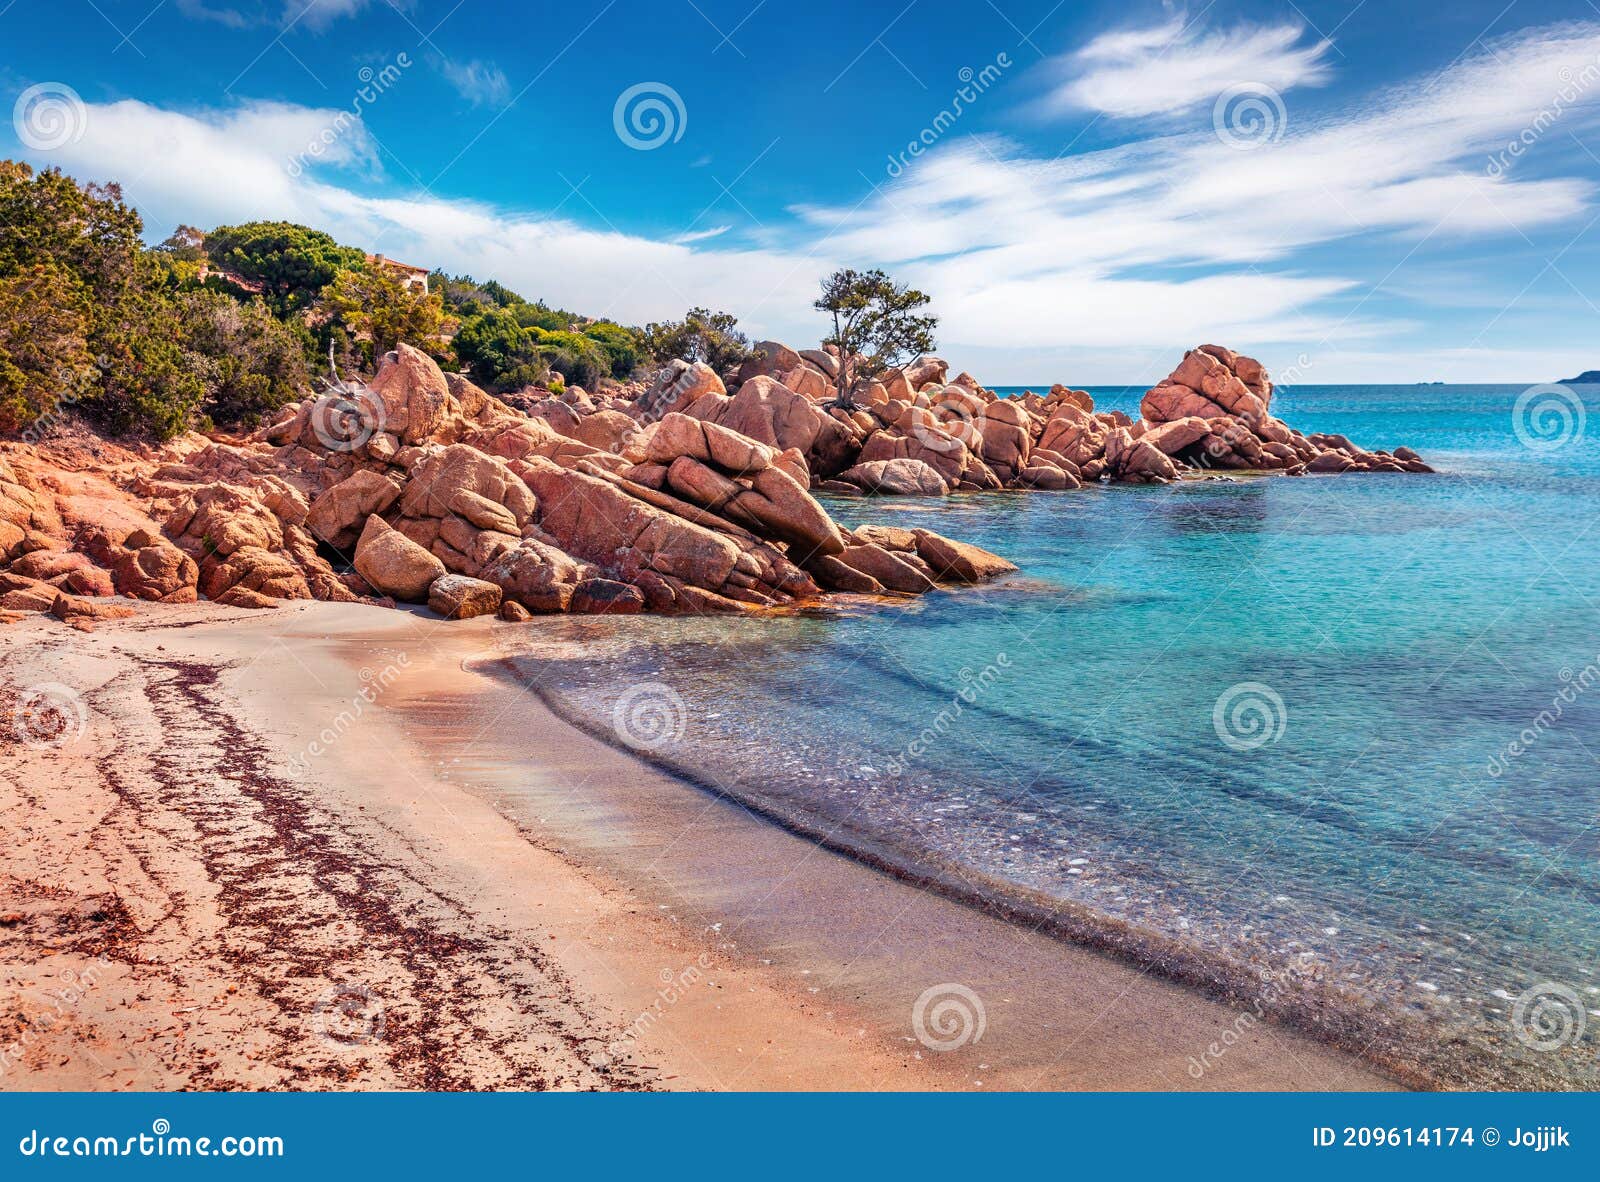 romantic morning scene of popular touris deastination - capriccioli beach. wonderful summer view of public beach with sand